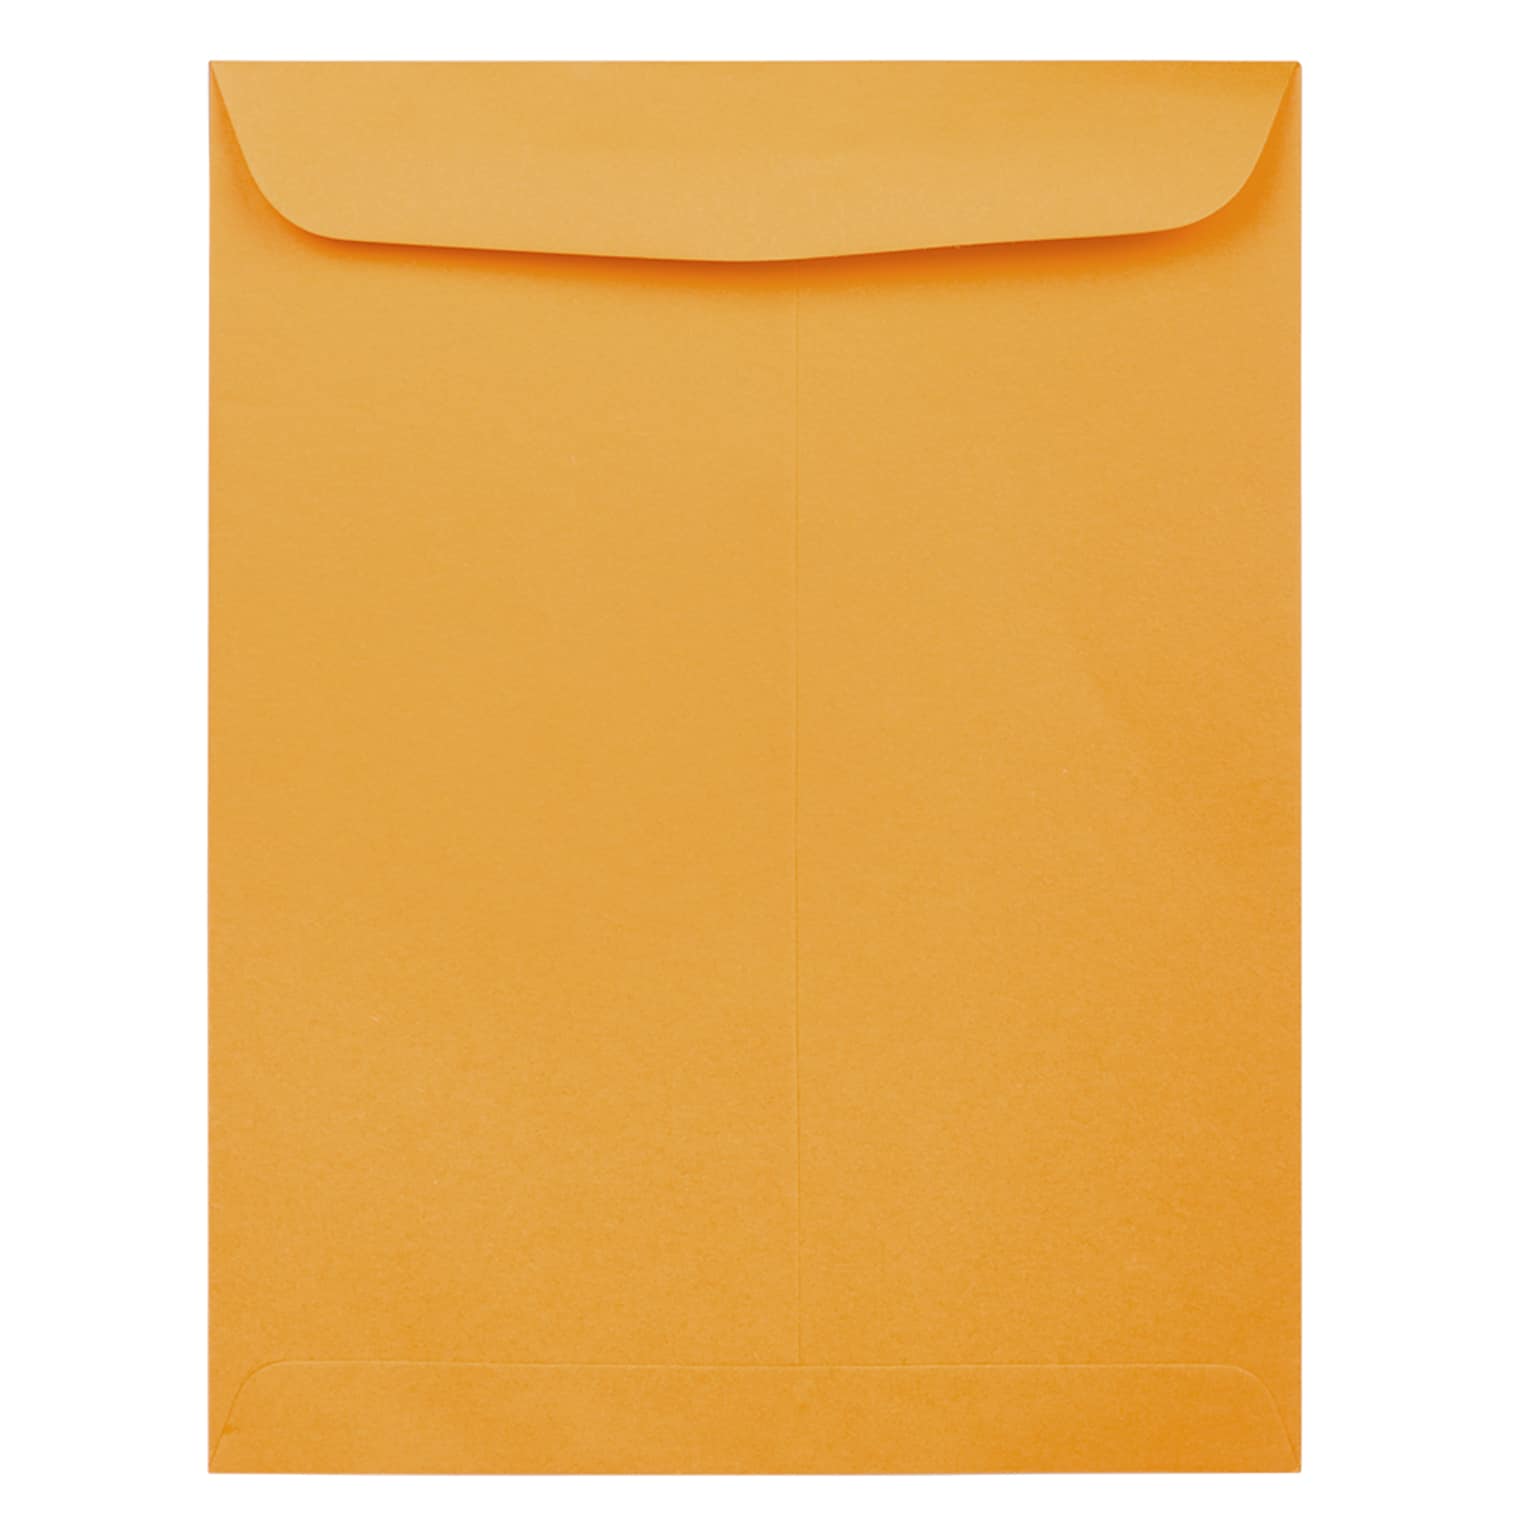 JAM Paper #15 1/2 Catalog Envelope, 12 x 15 1/2, Brown Kraft, 50/Pack (900493255D)